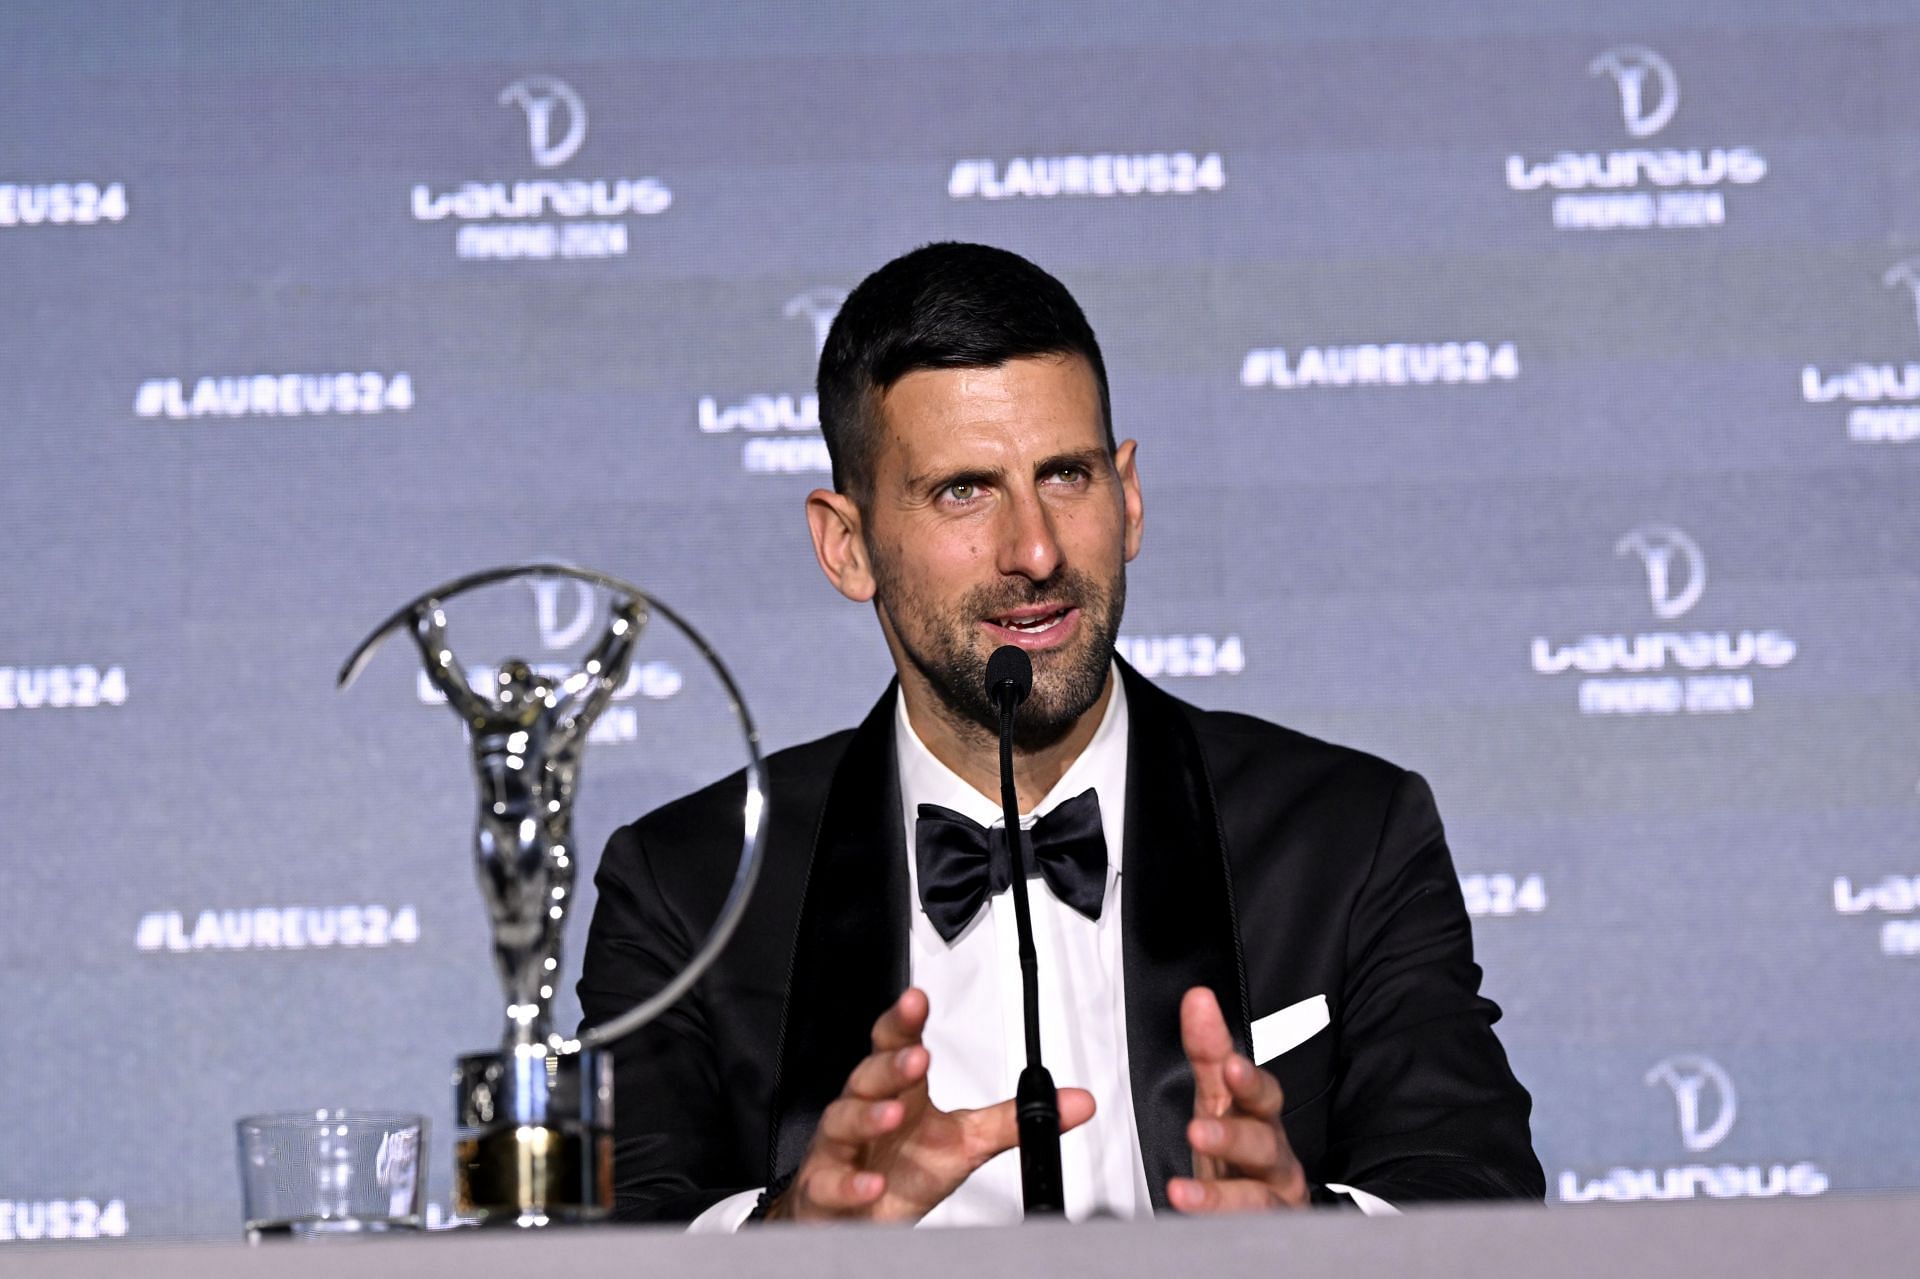 Winners Press Conference - Laureus World Sports Awards Madrid 2024